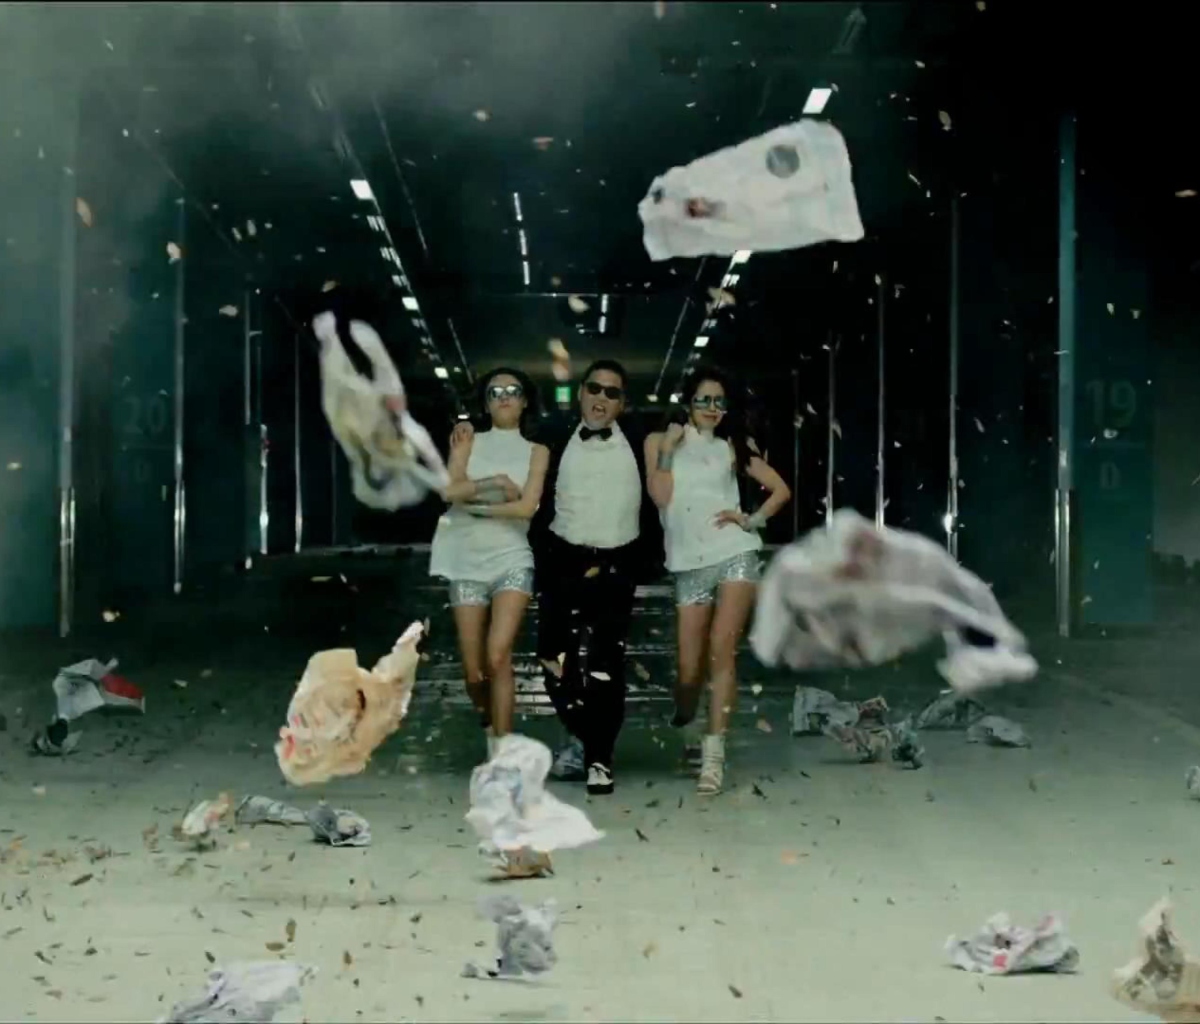 Das Psy - Gangnam Style Video Wallpaper 1200x1024